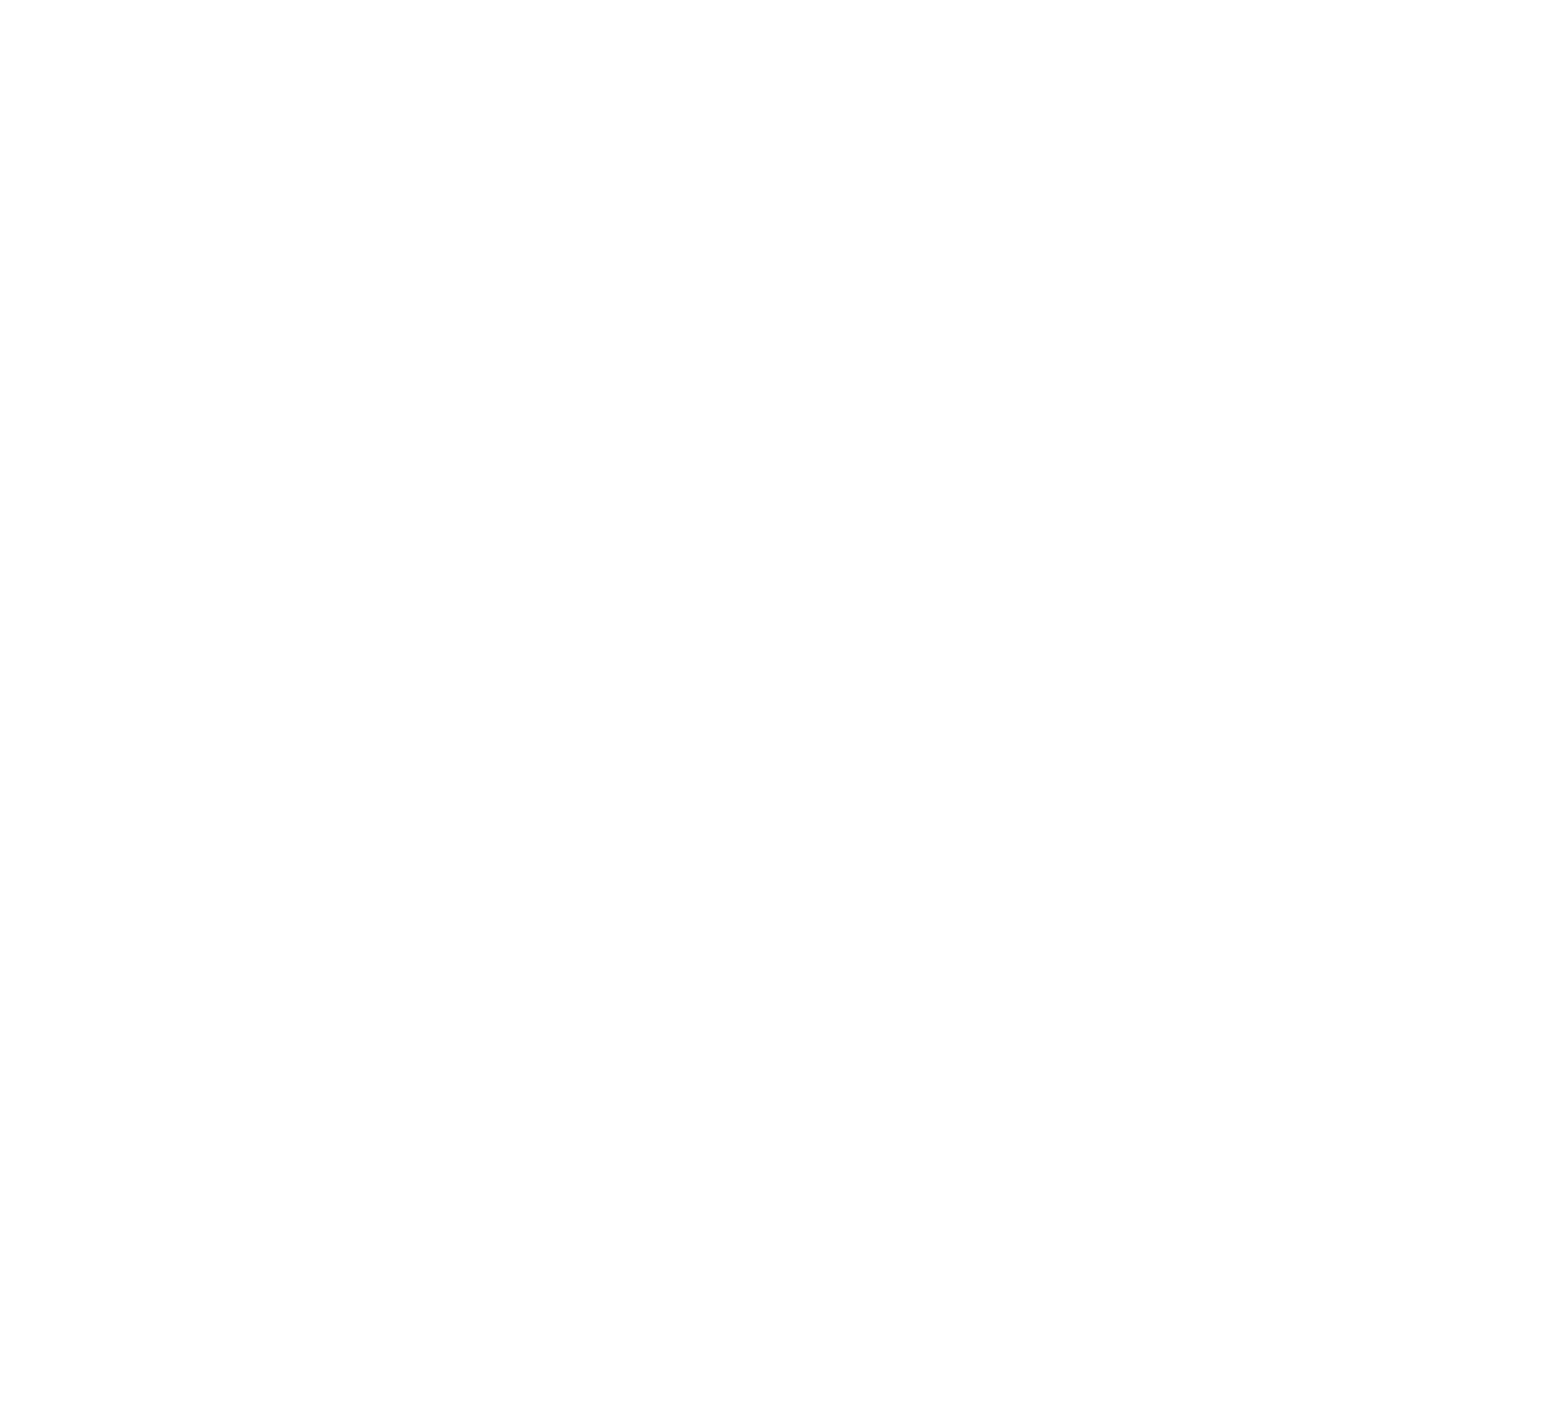 GREY2K USA Worldwide logo